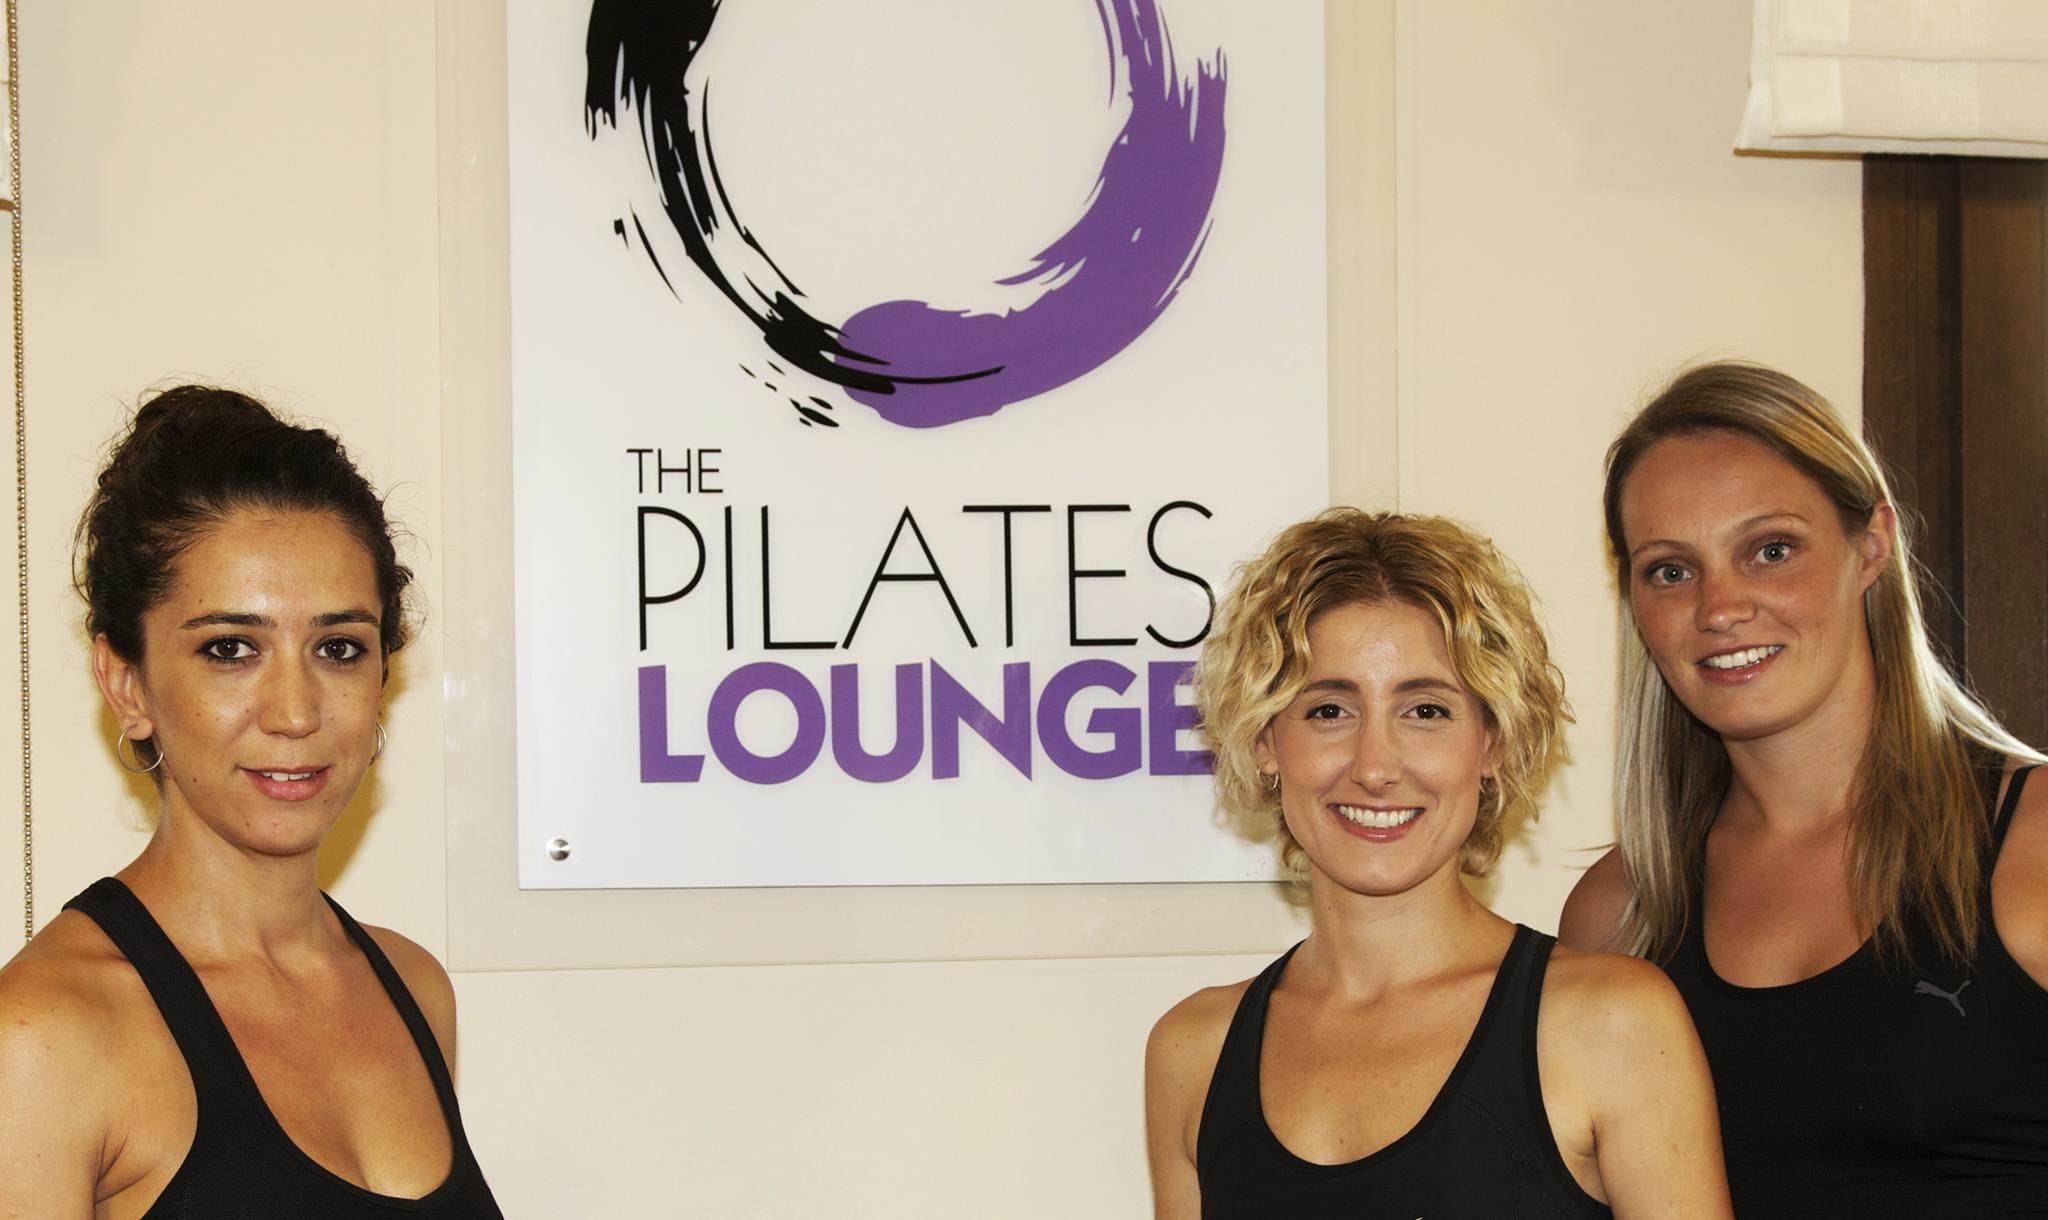 The Pilates Lounge